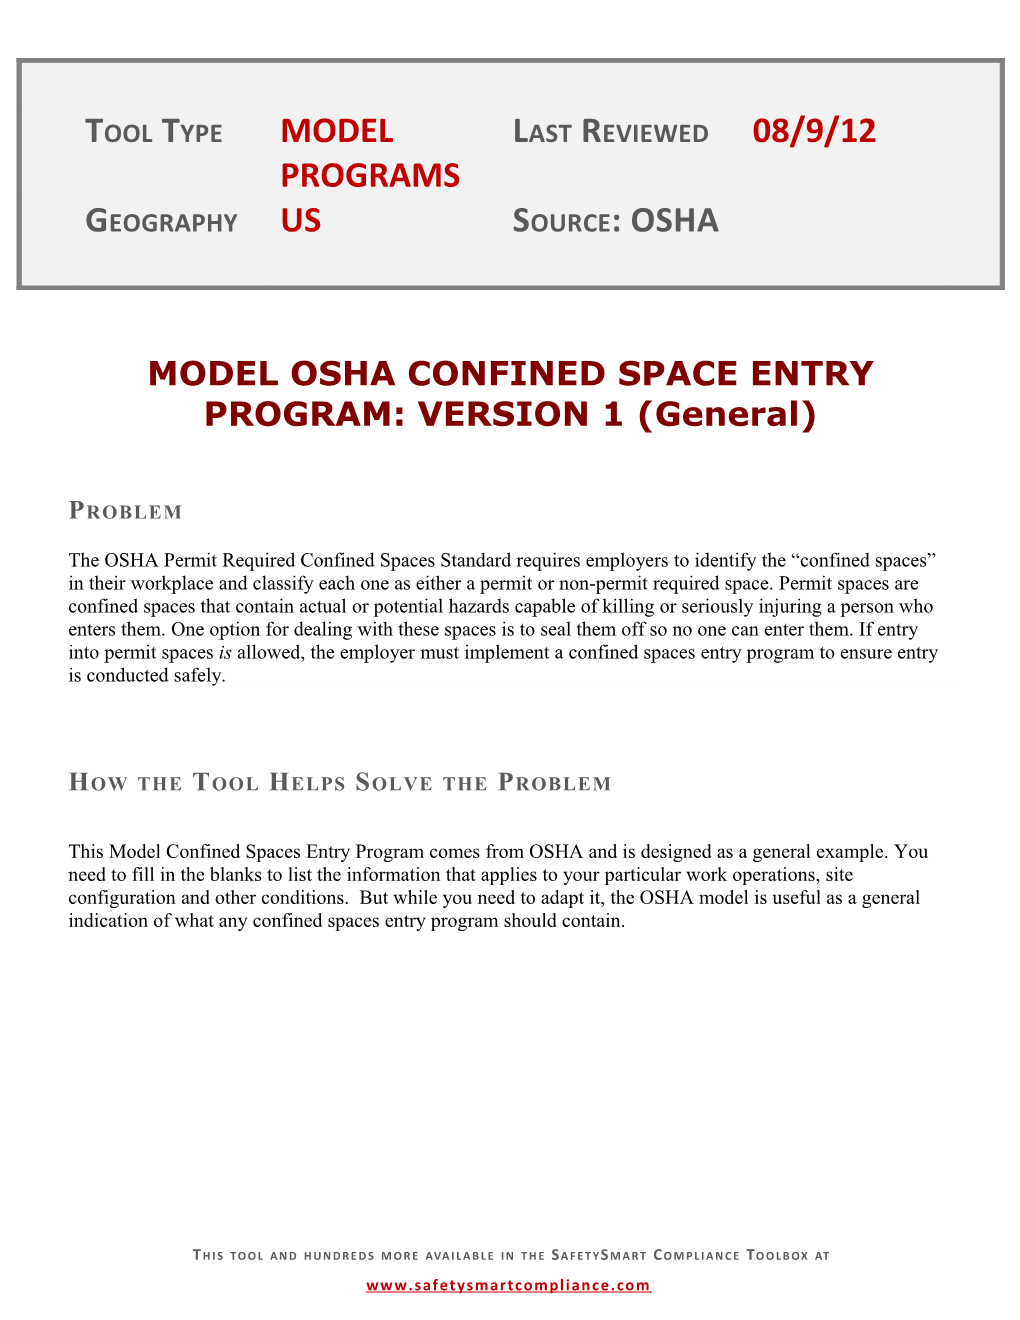 MODEL OSHA CONFINED SPACE ENTRY PROGRAM: VERSION 1 (General)